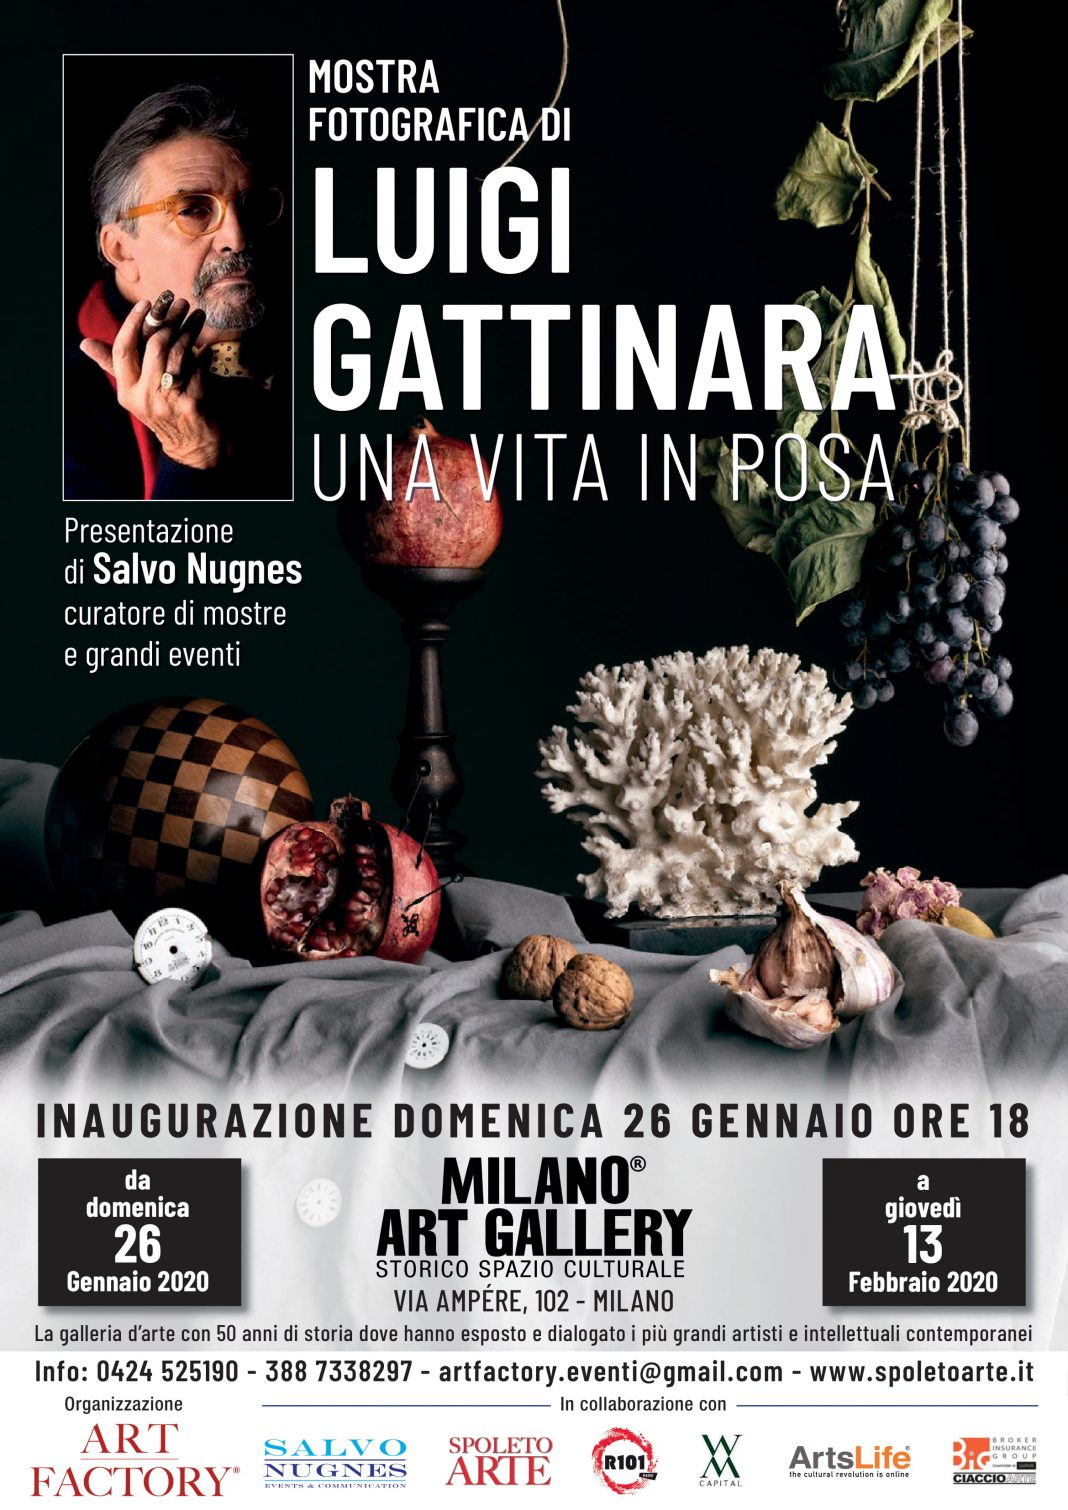 Luigi Gattinara – Una vita in posahttps://www.exibart.com/repository/media/formidable/11/locandina-Mostra-GATTINARA-MAG-1068x1510.jpg